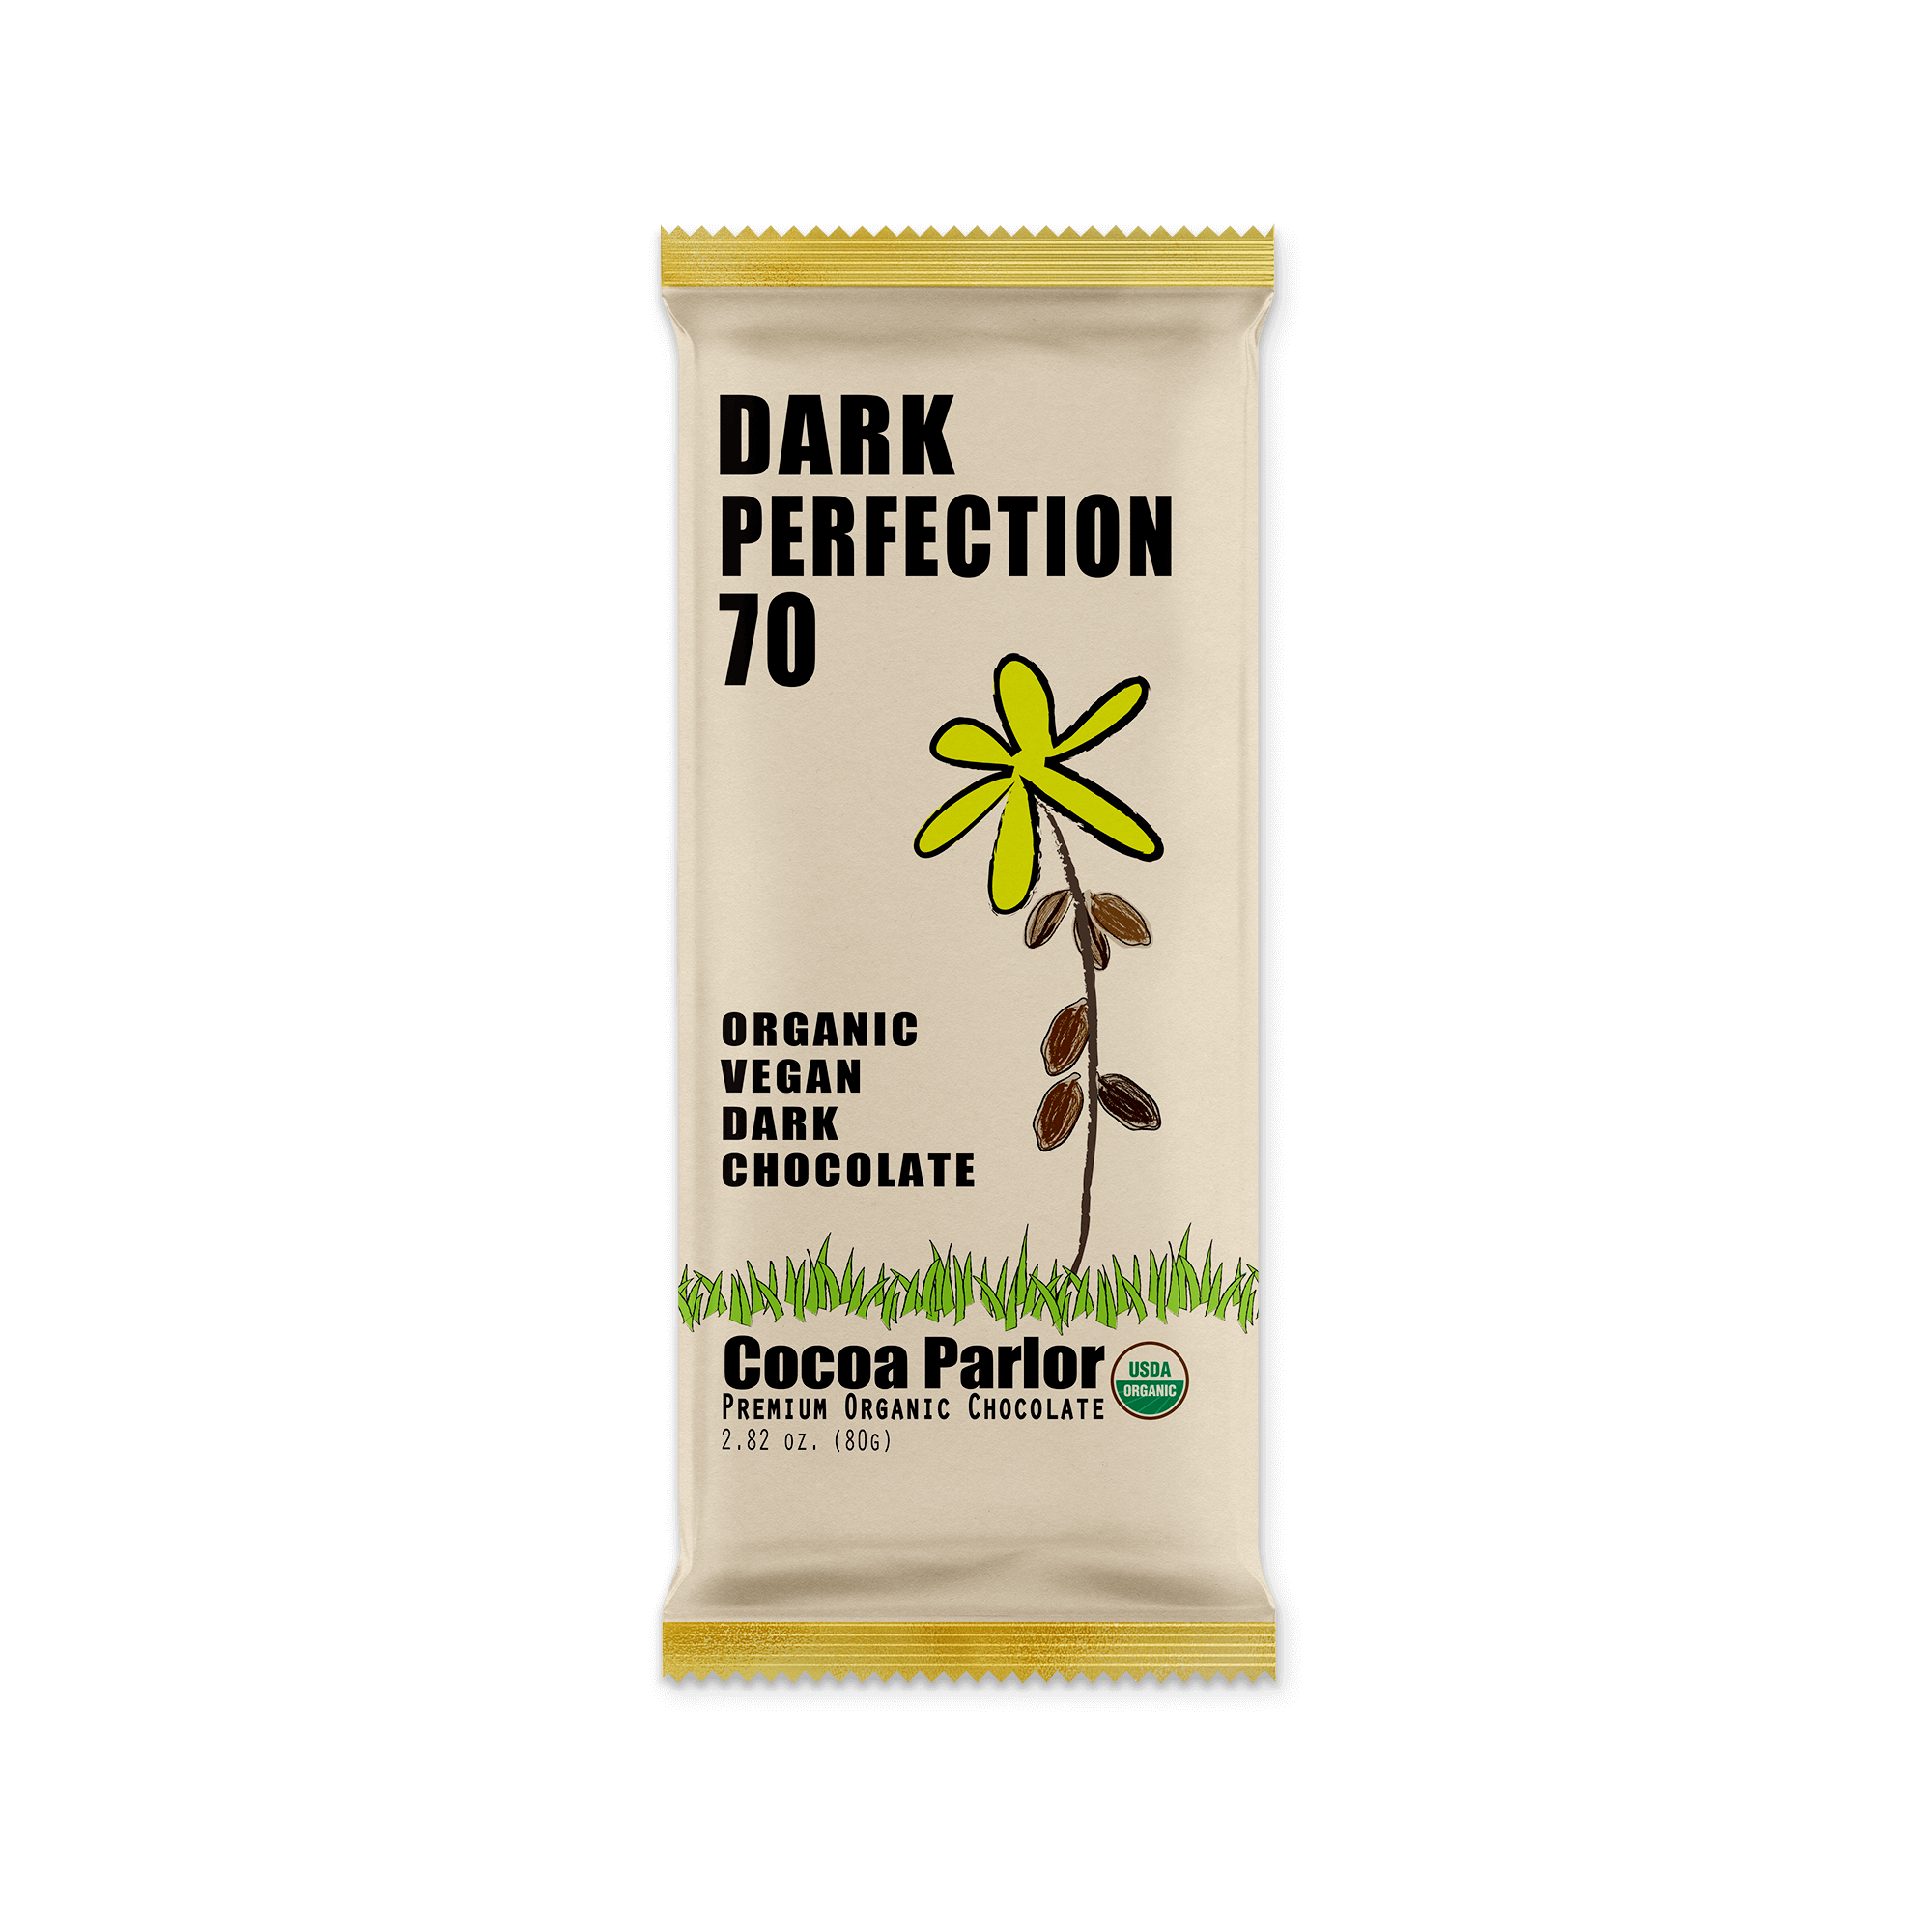 Dark chocolate perfection